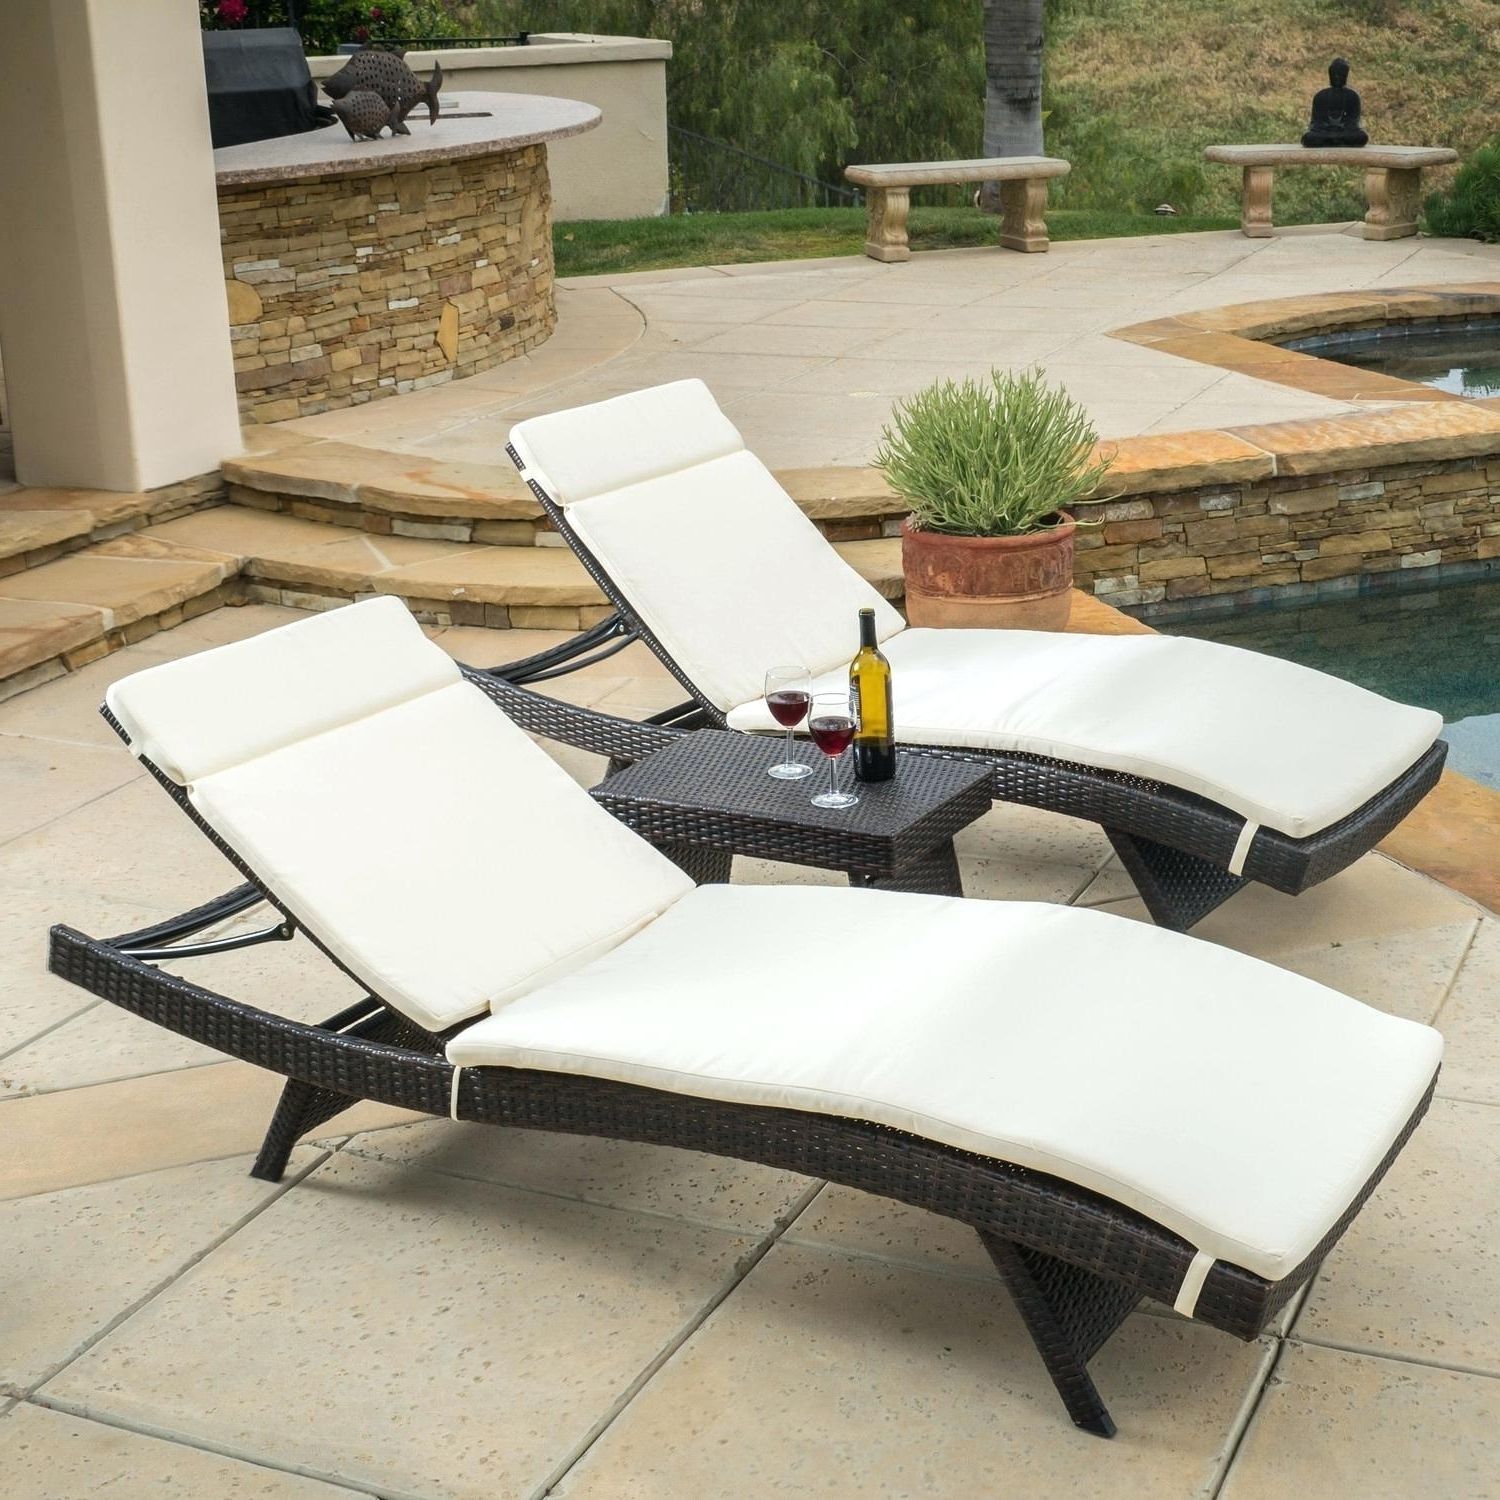 Preferred Sunbrella Chaise Lounge Cushion Cushions 77 X 25 Beige With Regard To Sunbrella Chaise Lounge Cushions (View 8 of 15)